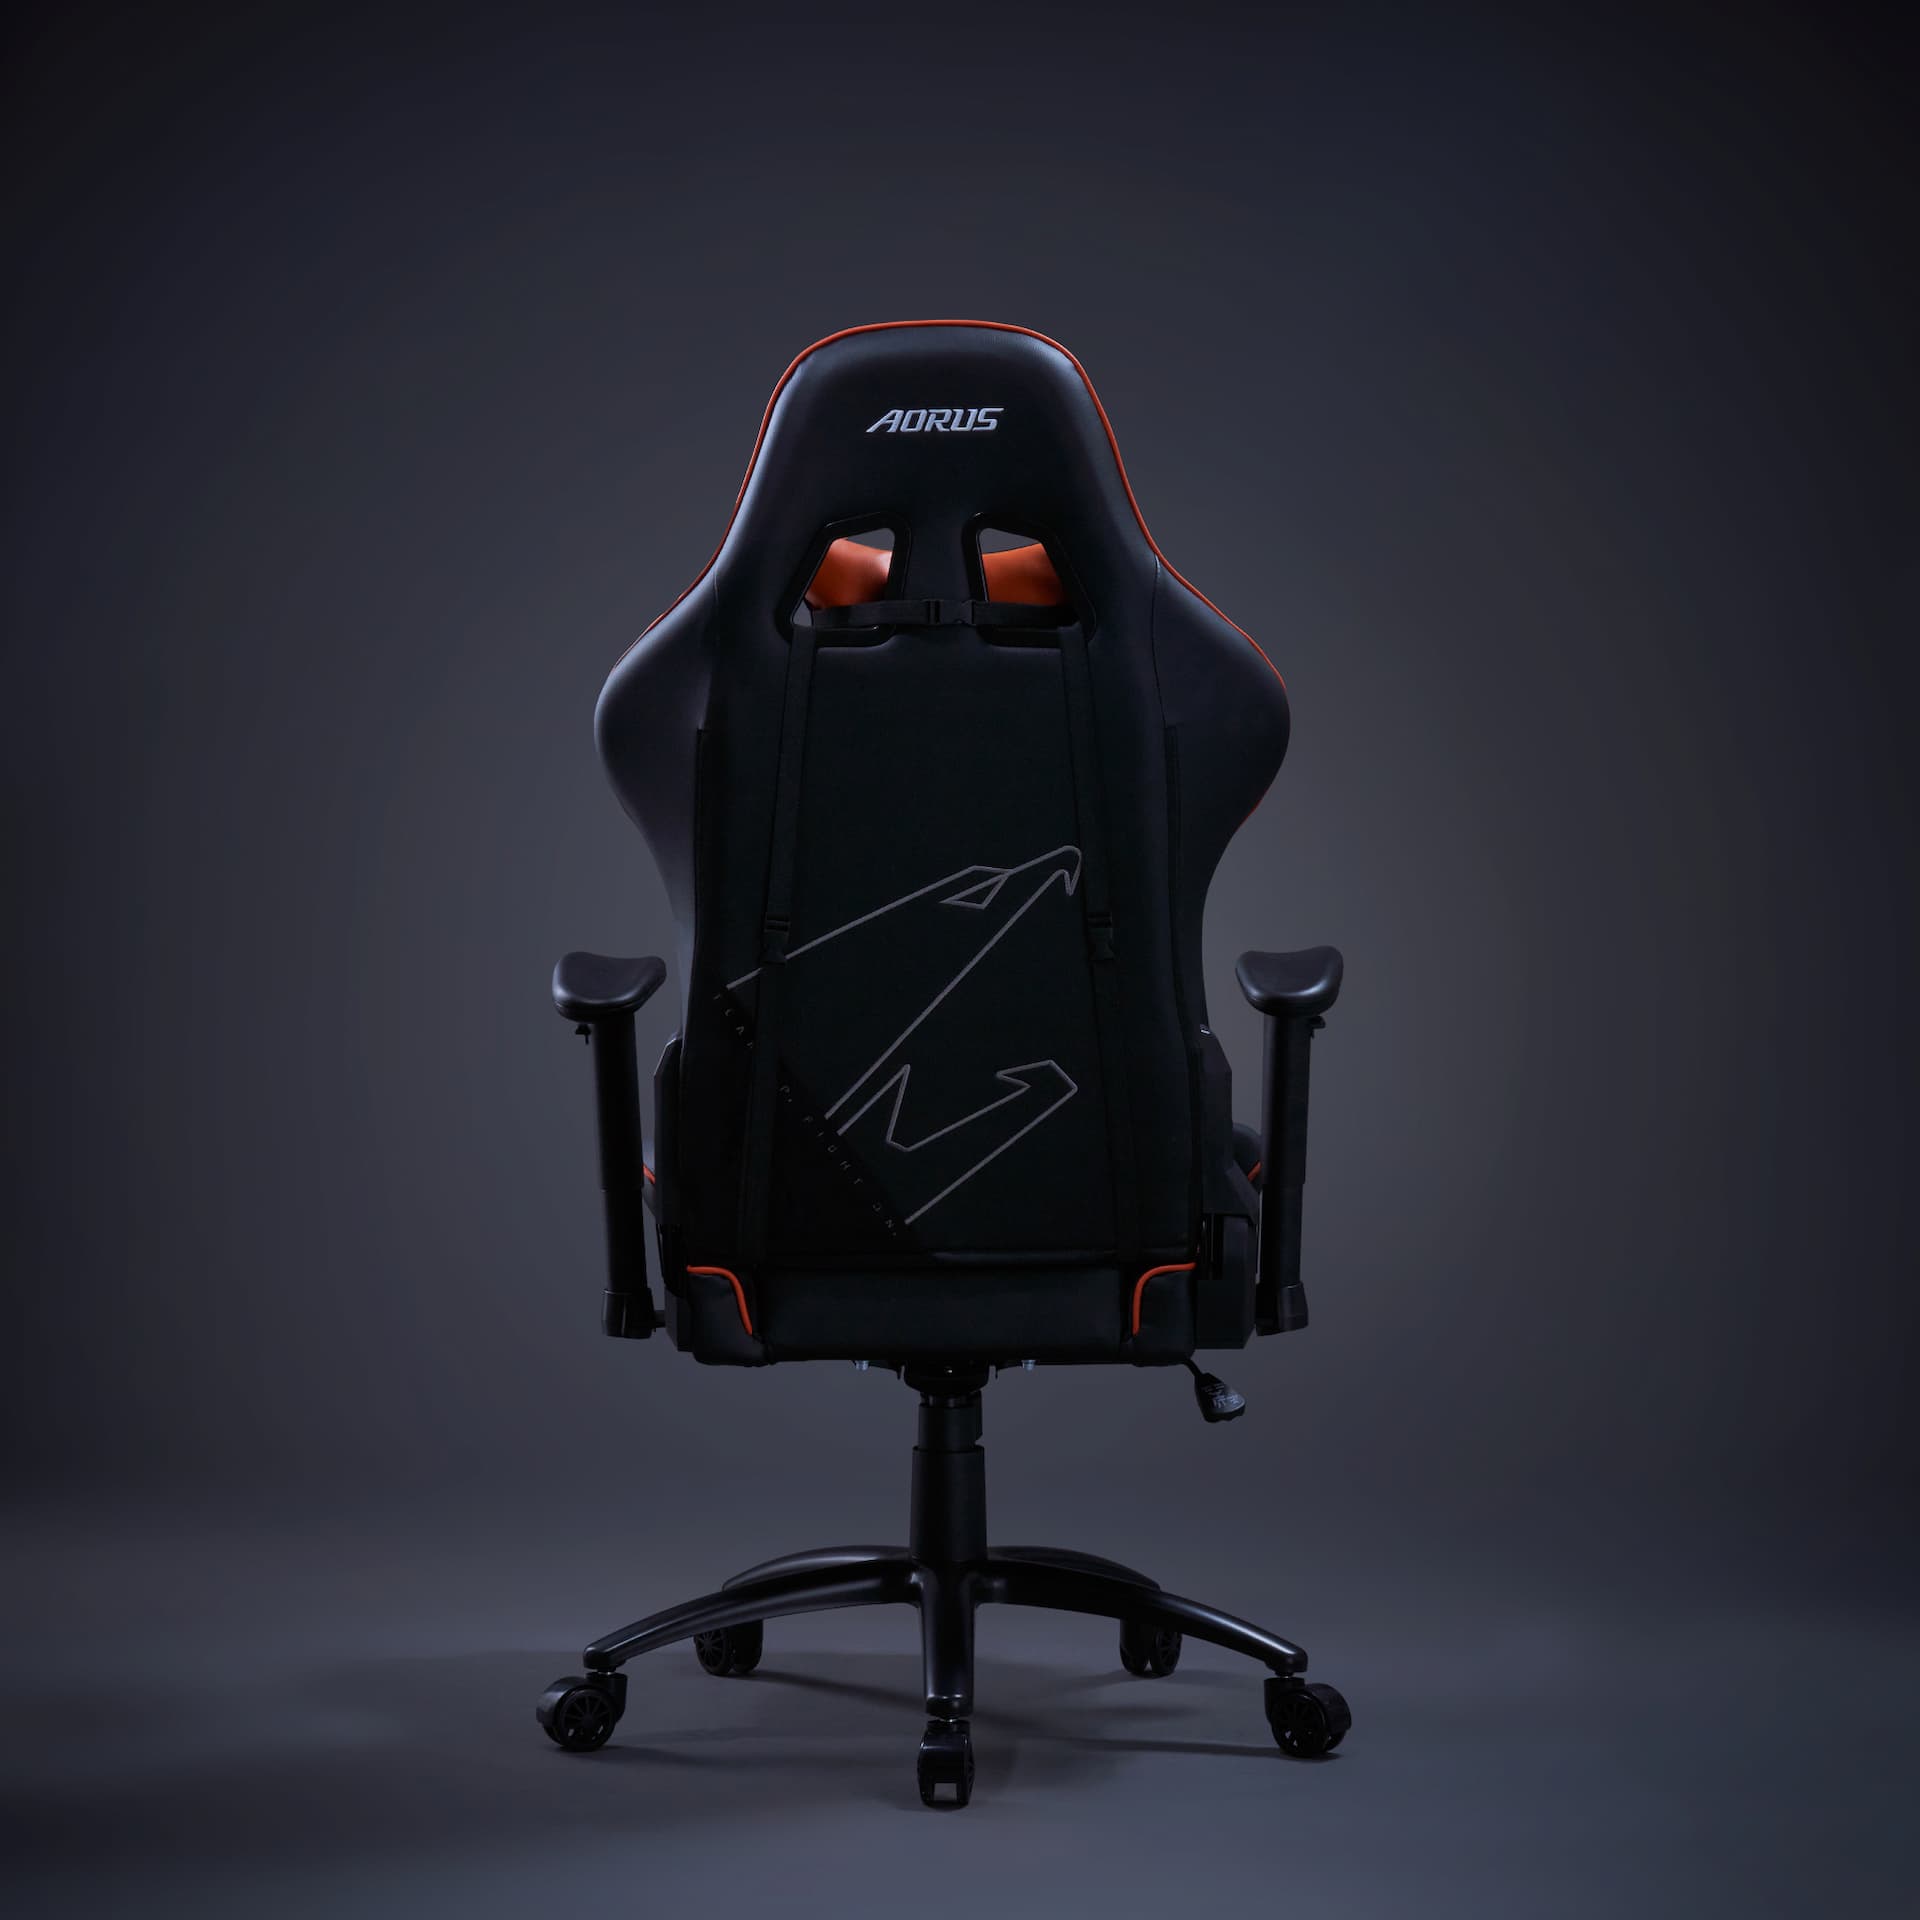 Best Gaming chair malaysia murah with Ergonomic Design